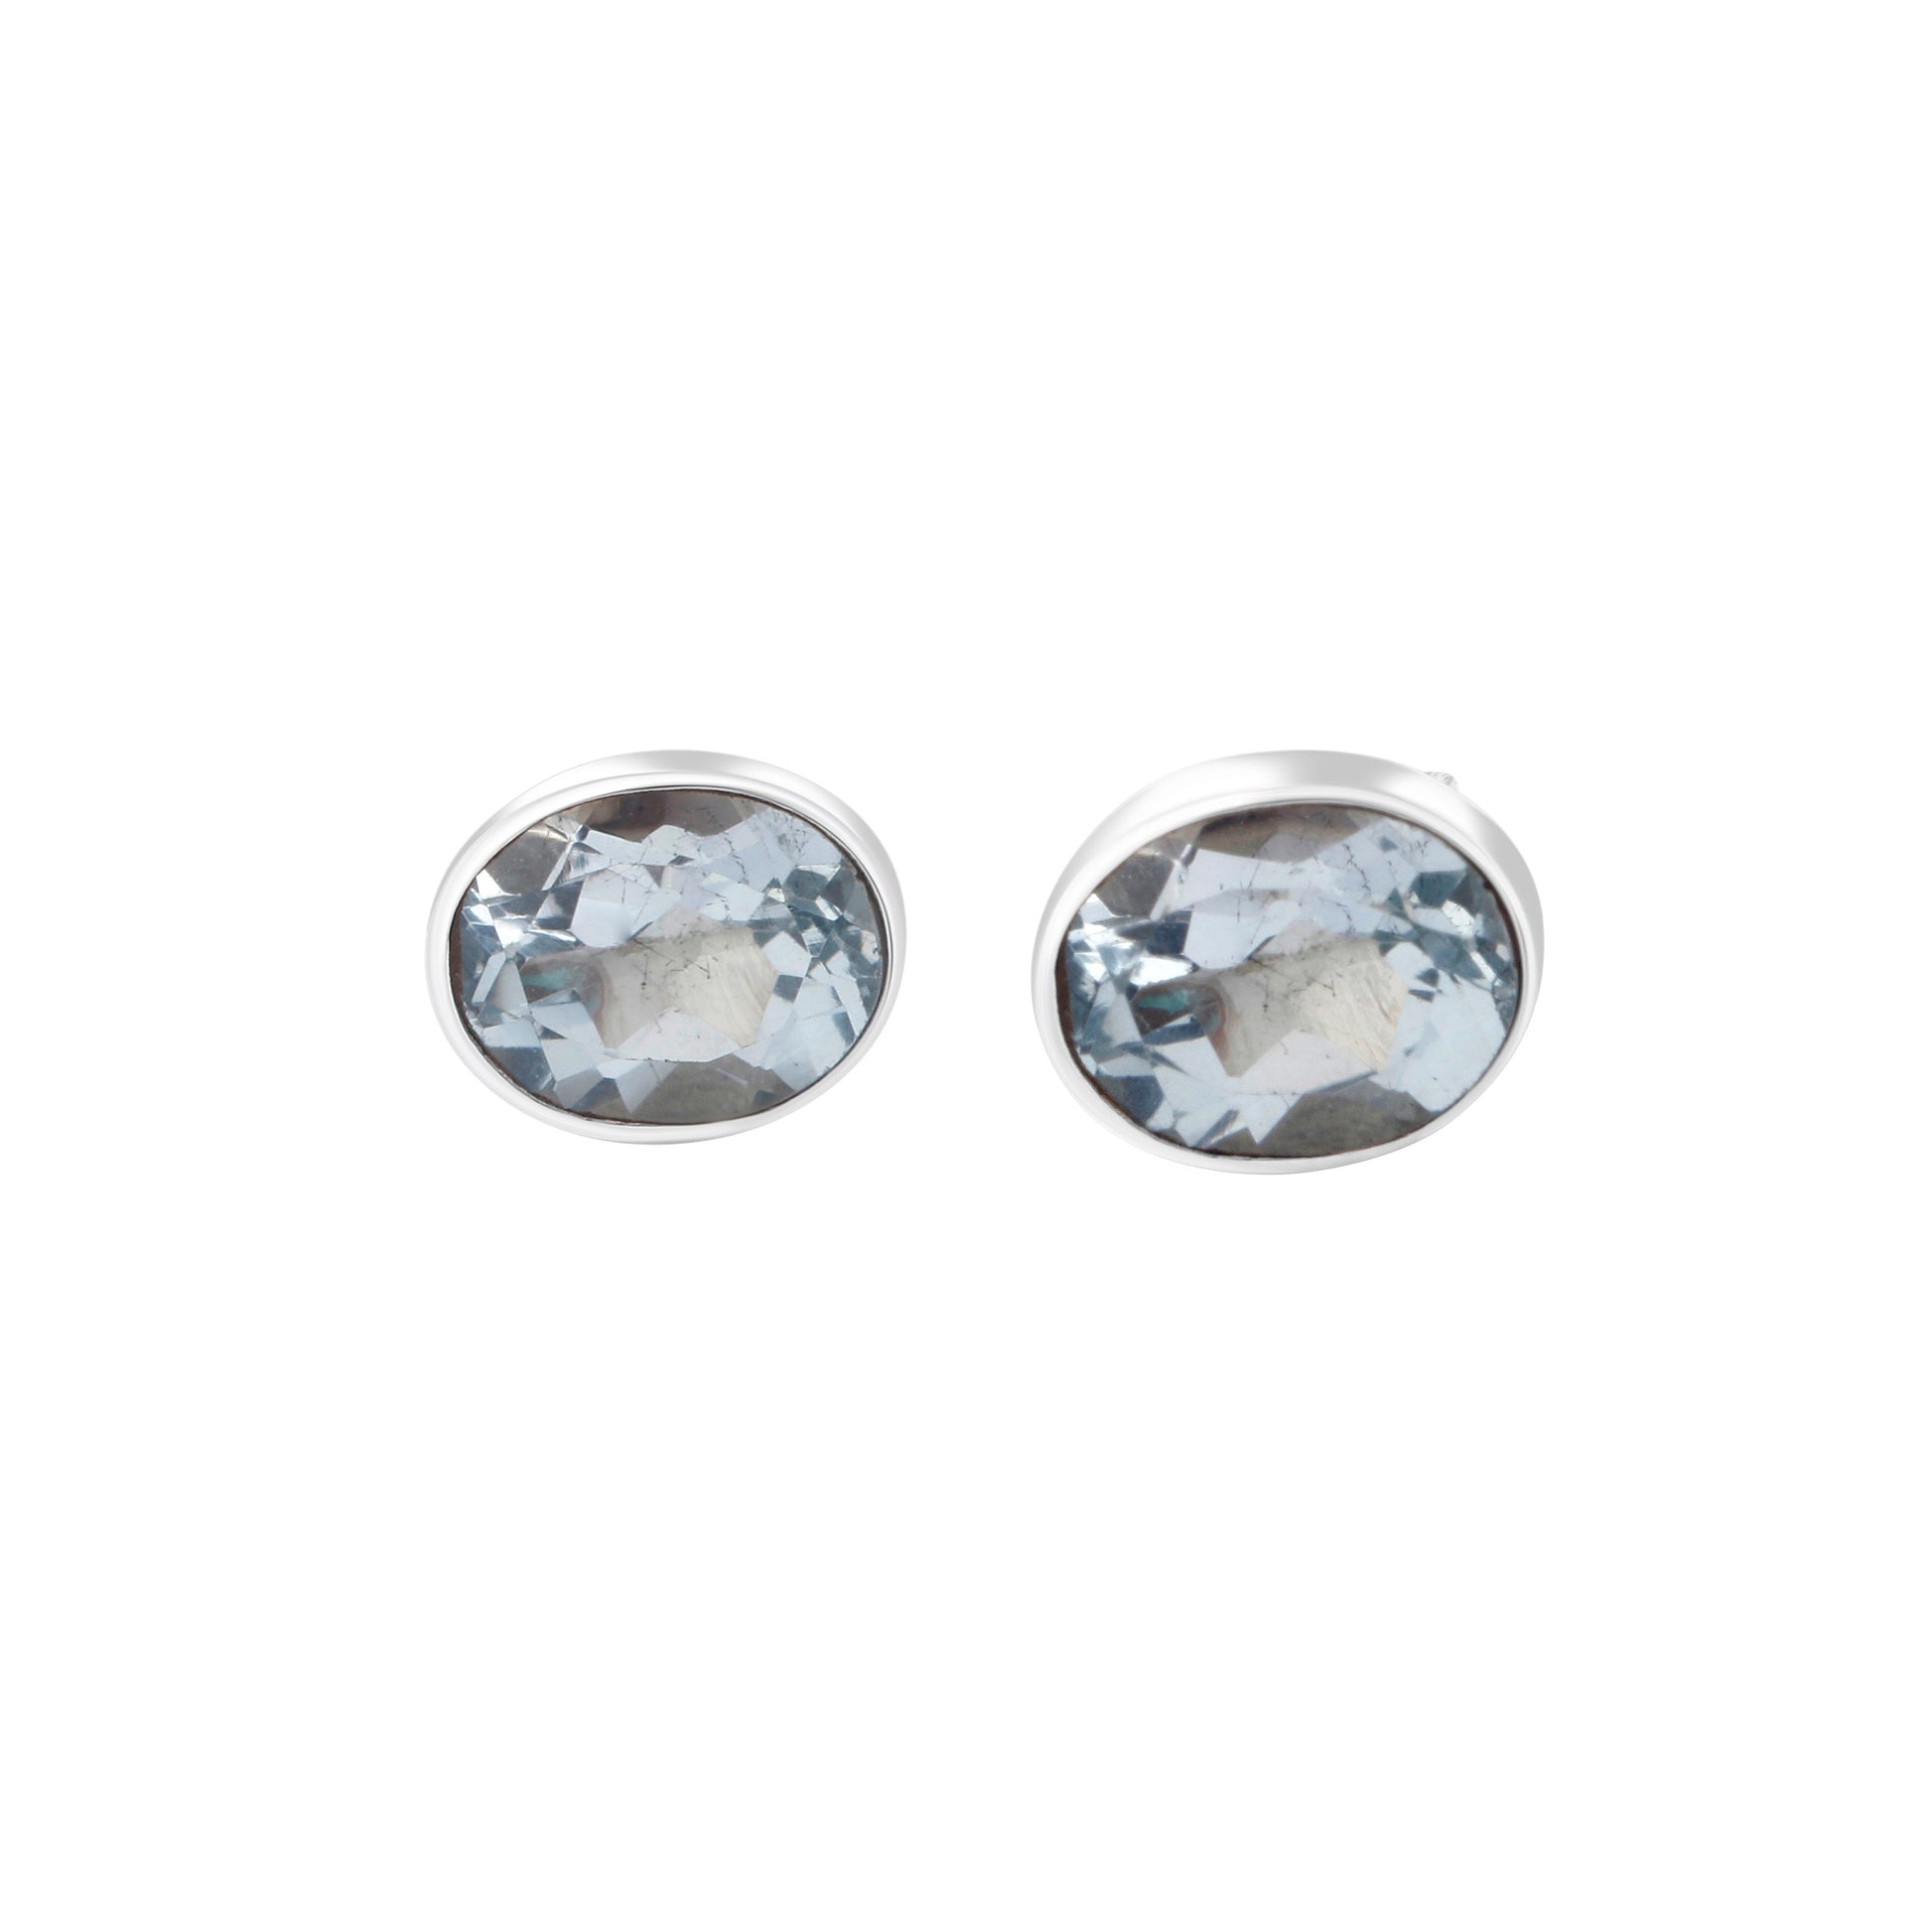 Beautifully Cut Genuine Blue TOPAZ Gemstones Solid 925 SILVER Oval Stud Earrings, Sagittarius Zodiac December Birthstone Studs, Australia, Zorbajewellers